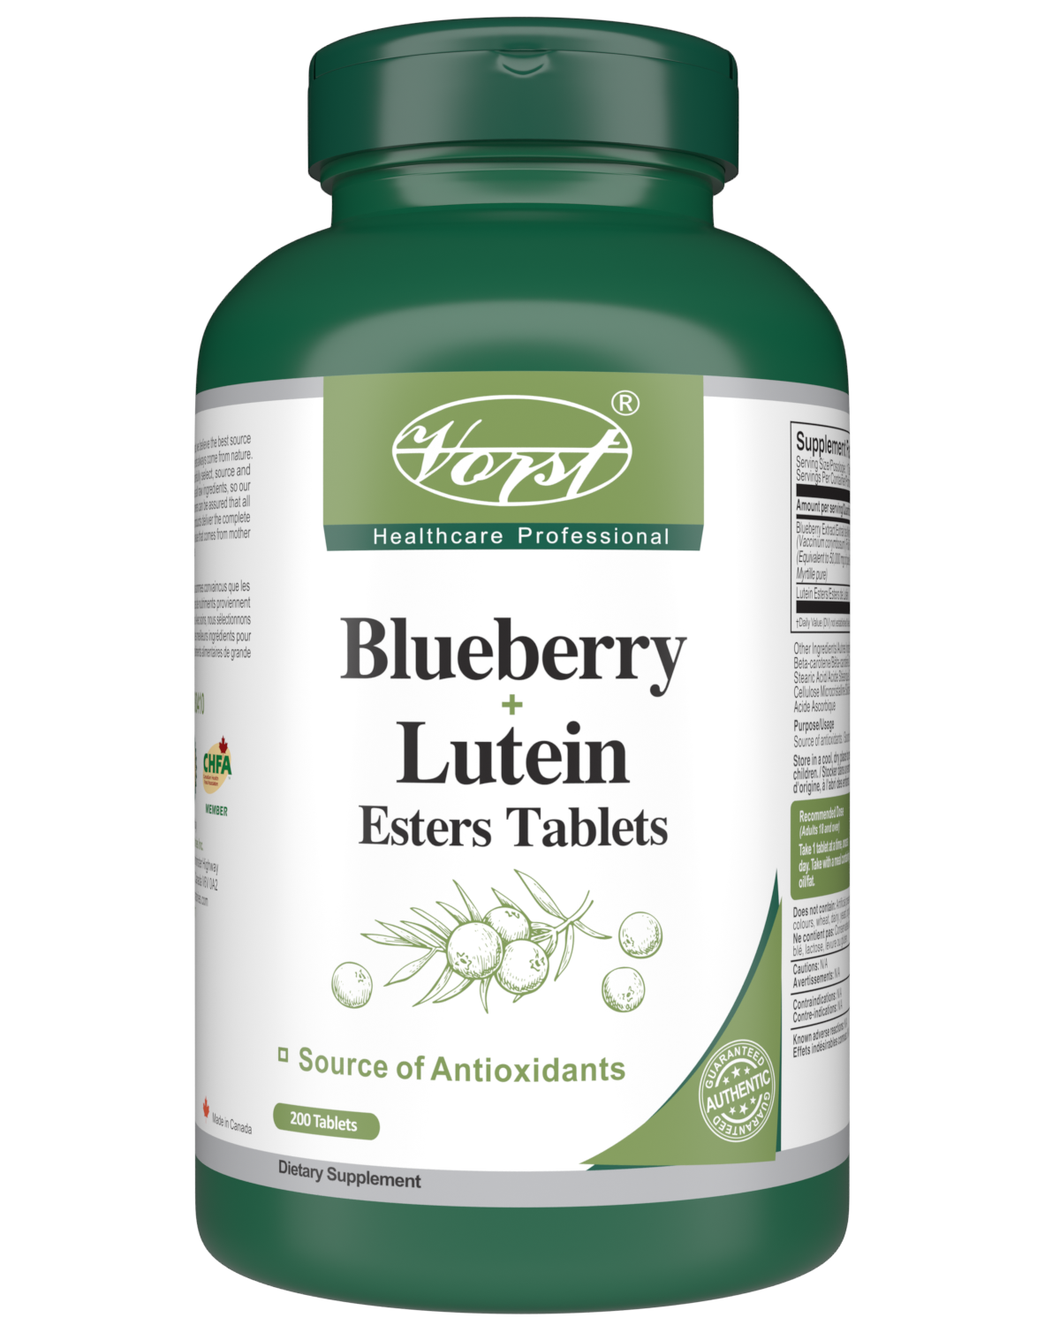 Blueberry & Lutein for Eye, Antioxidant